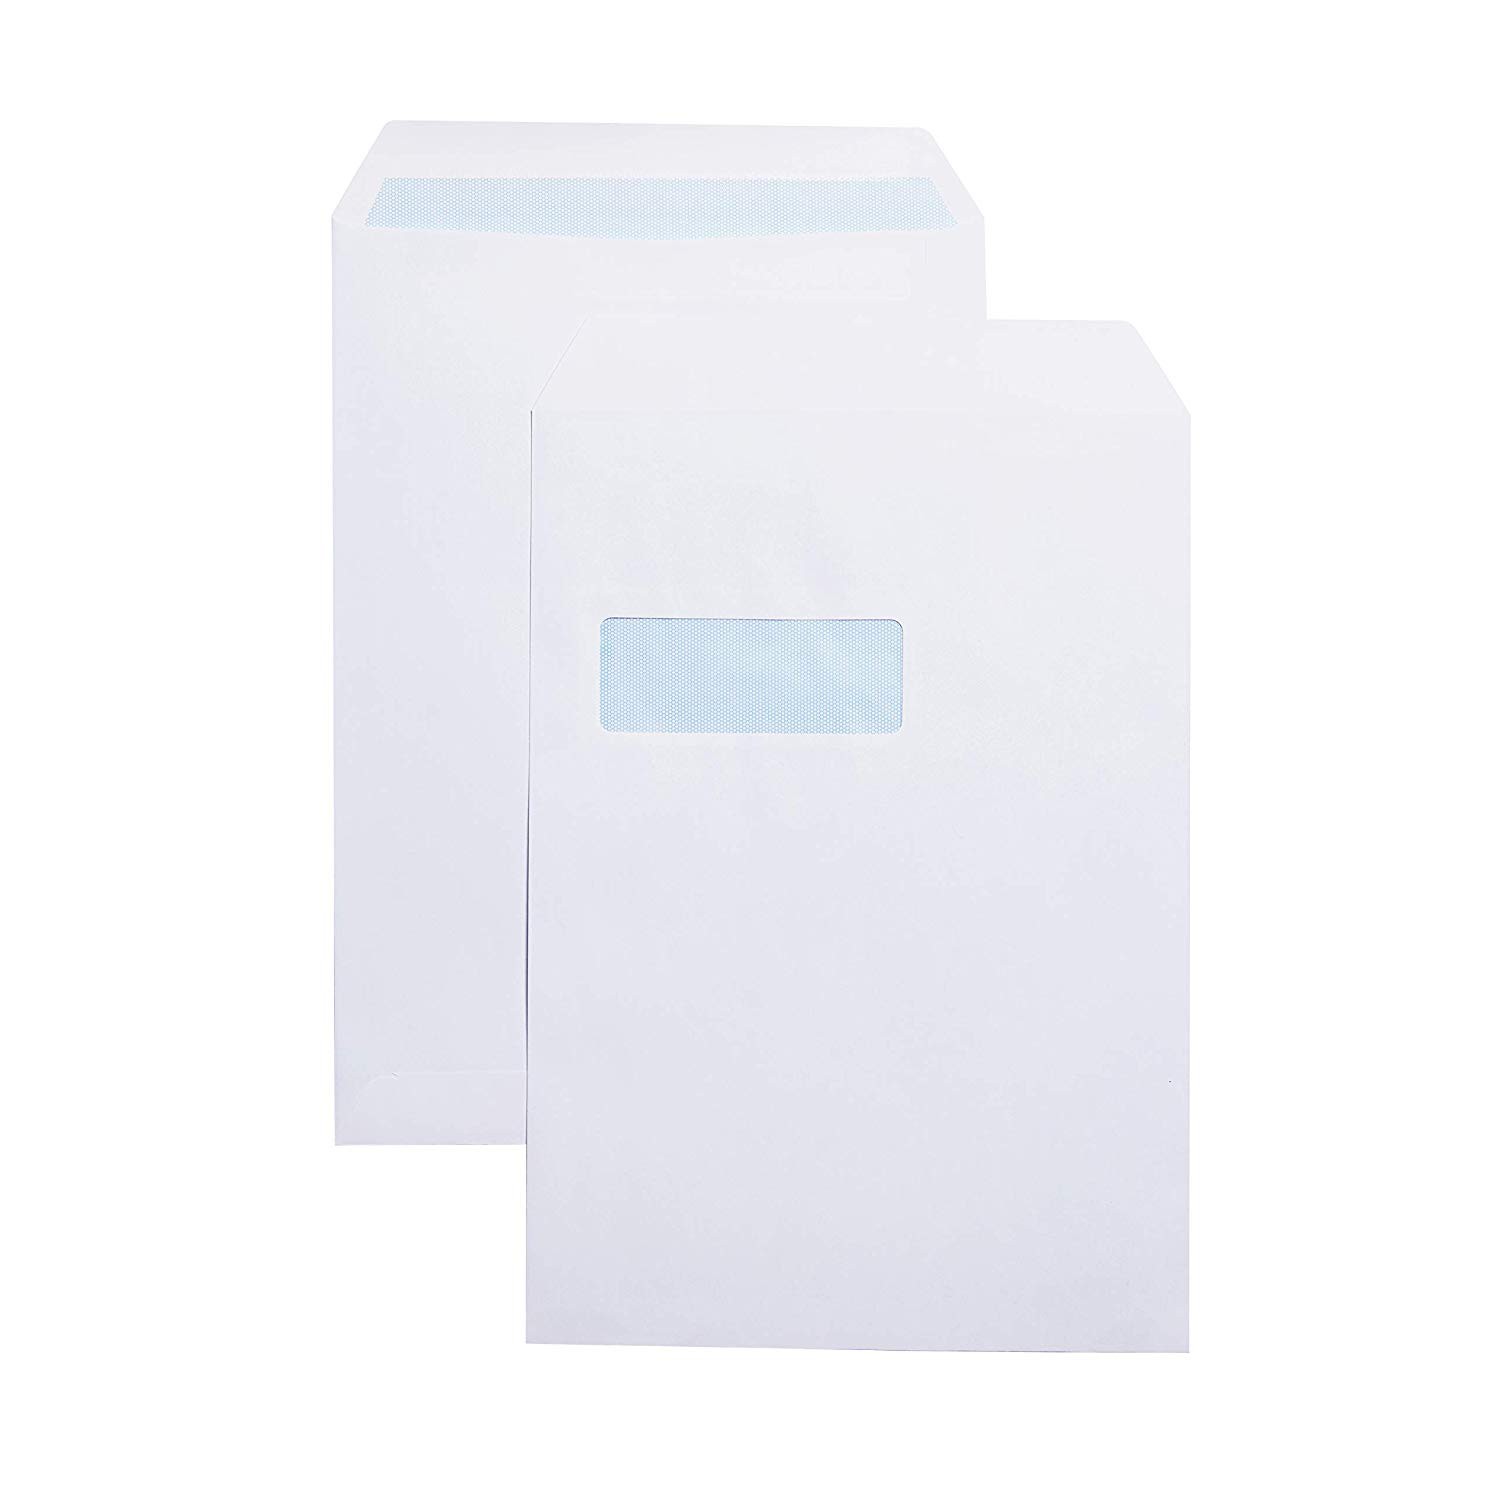 C4+White+Window+90gsm+Self+Seal+Envelopes+Box+250